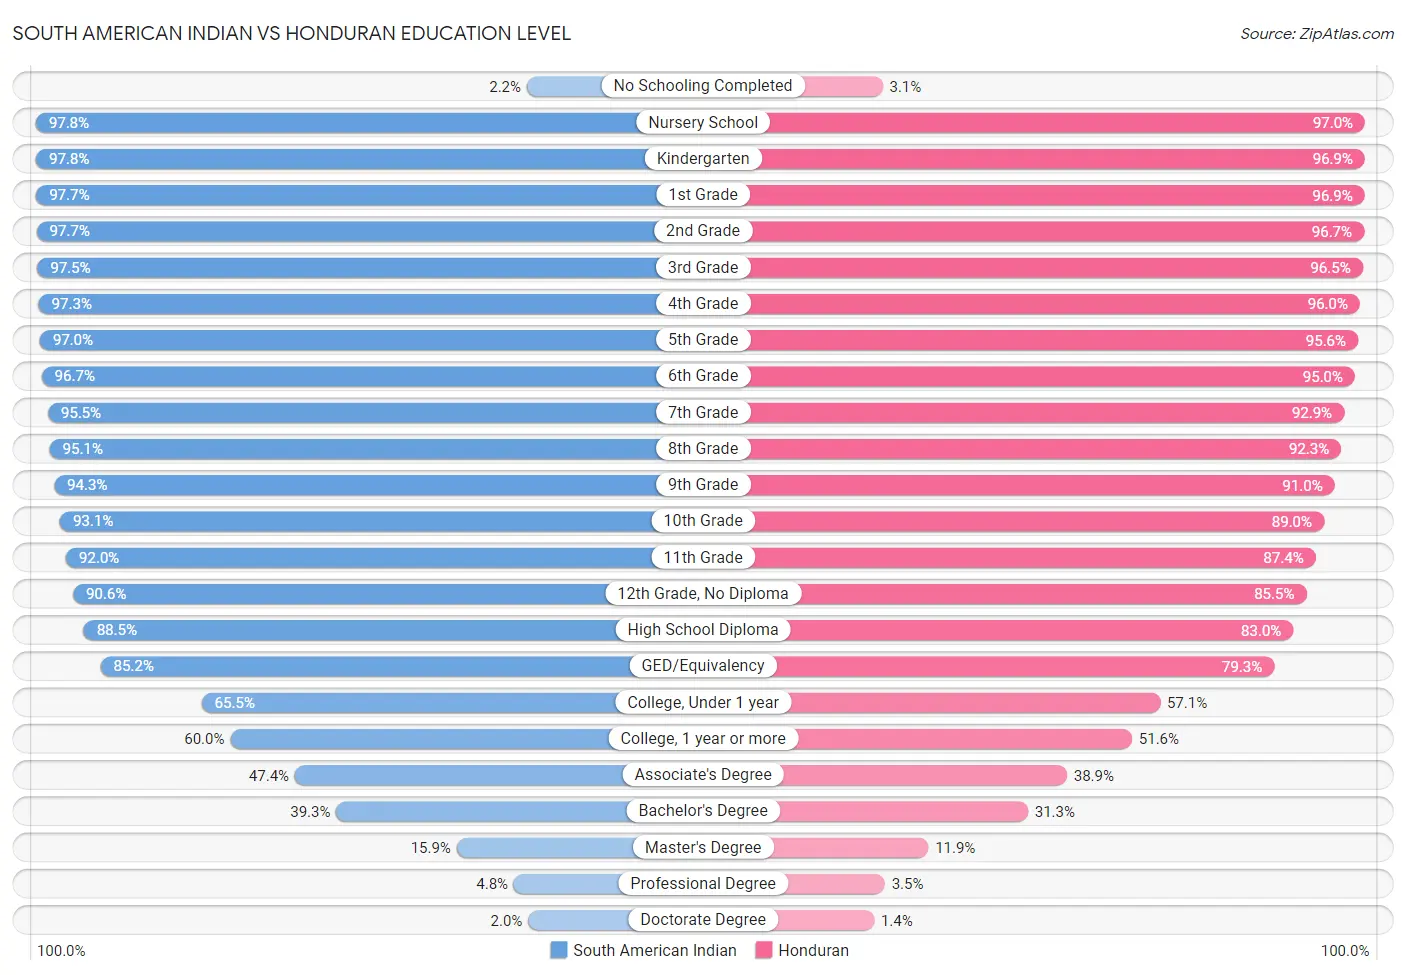 South American Indian vs Honduran Education Level